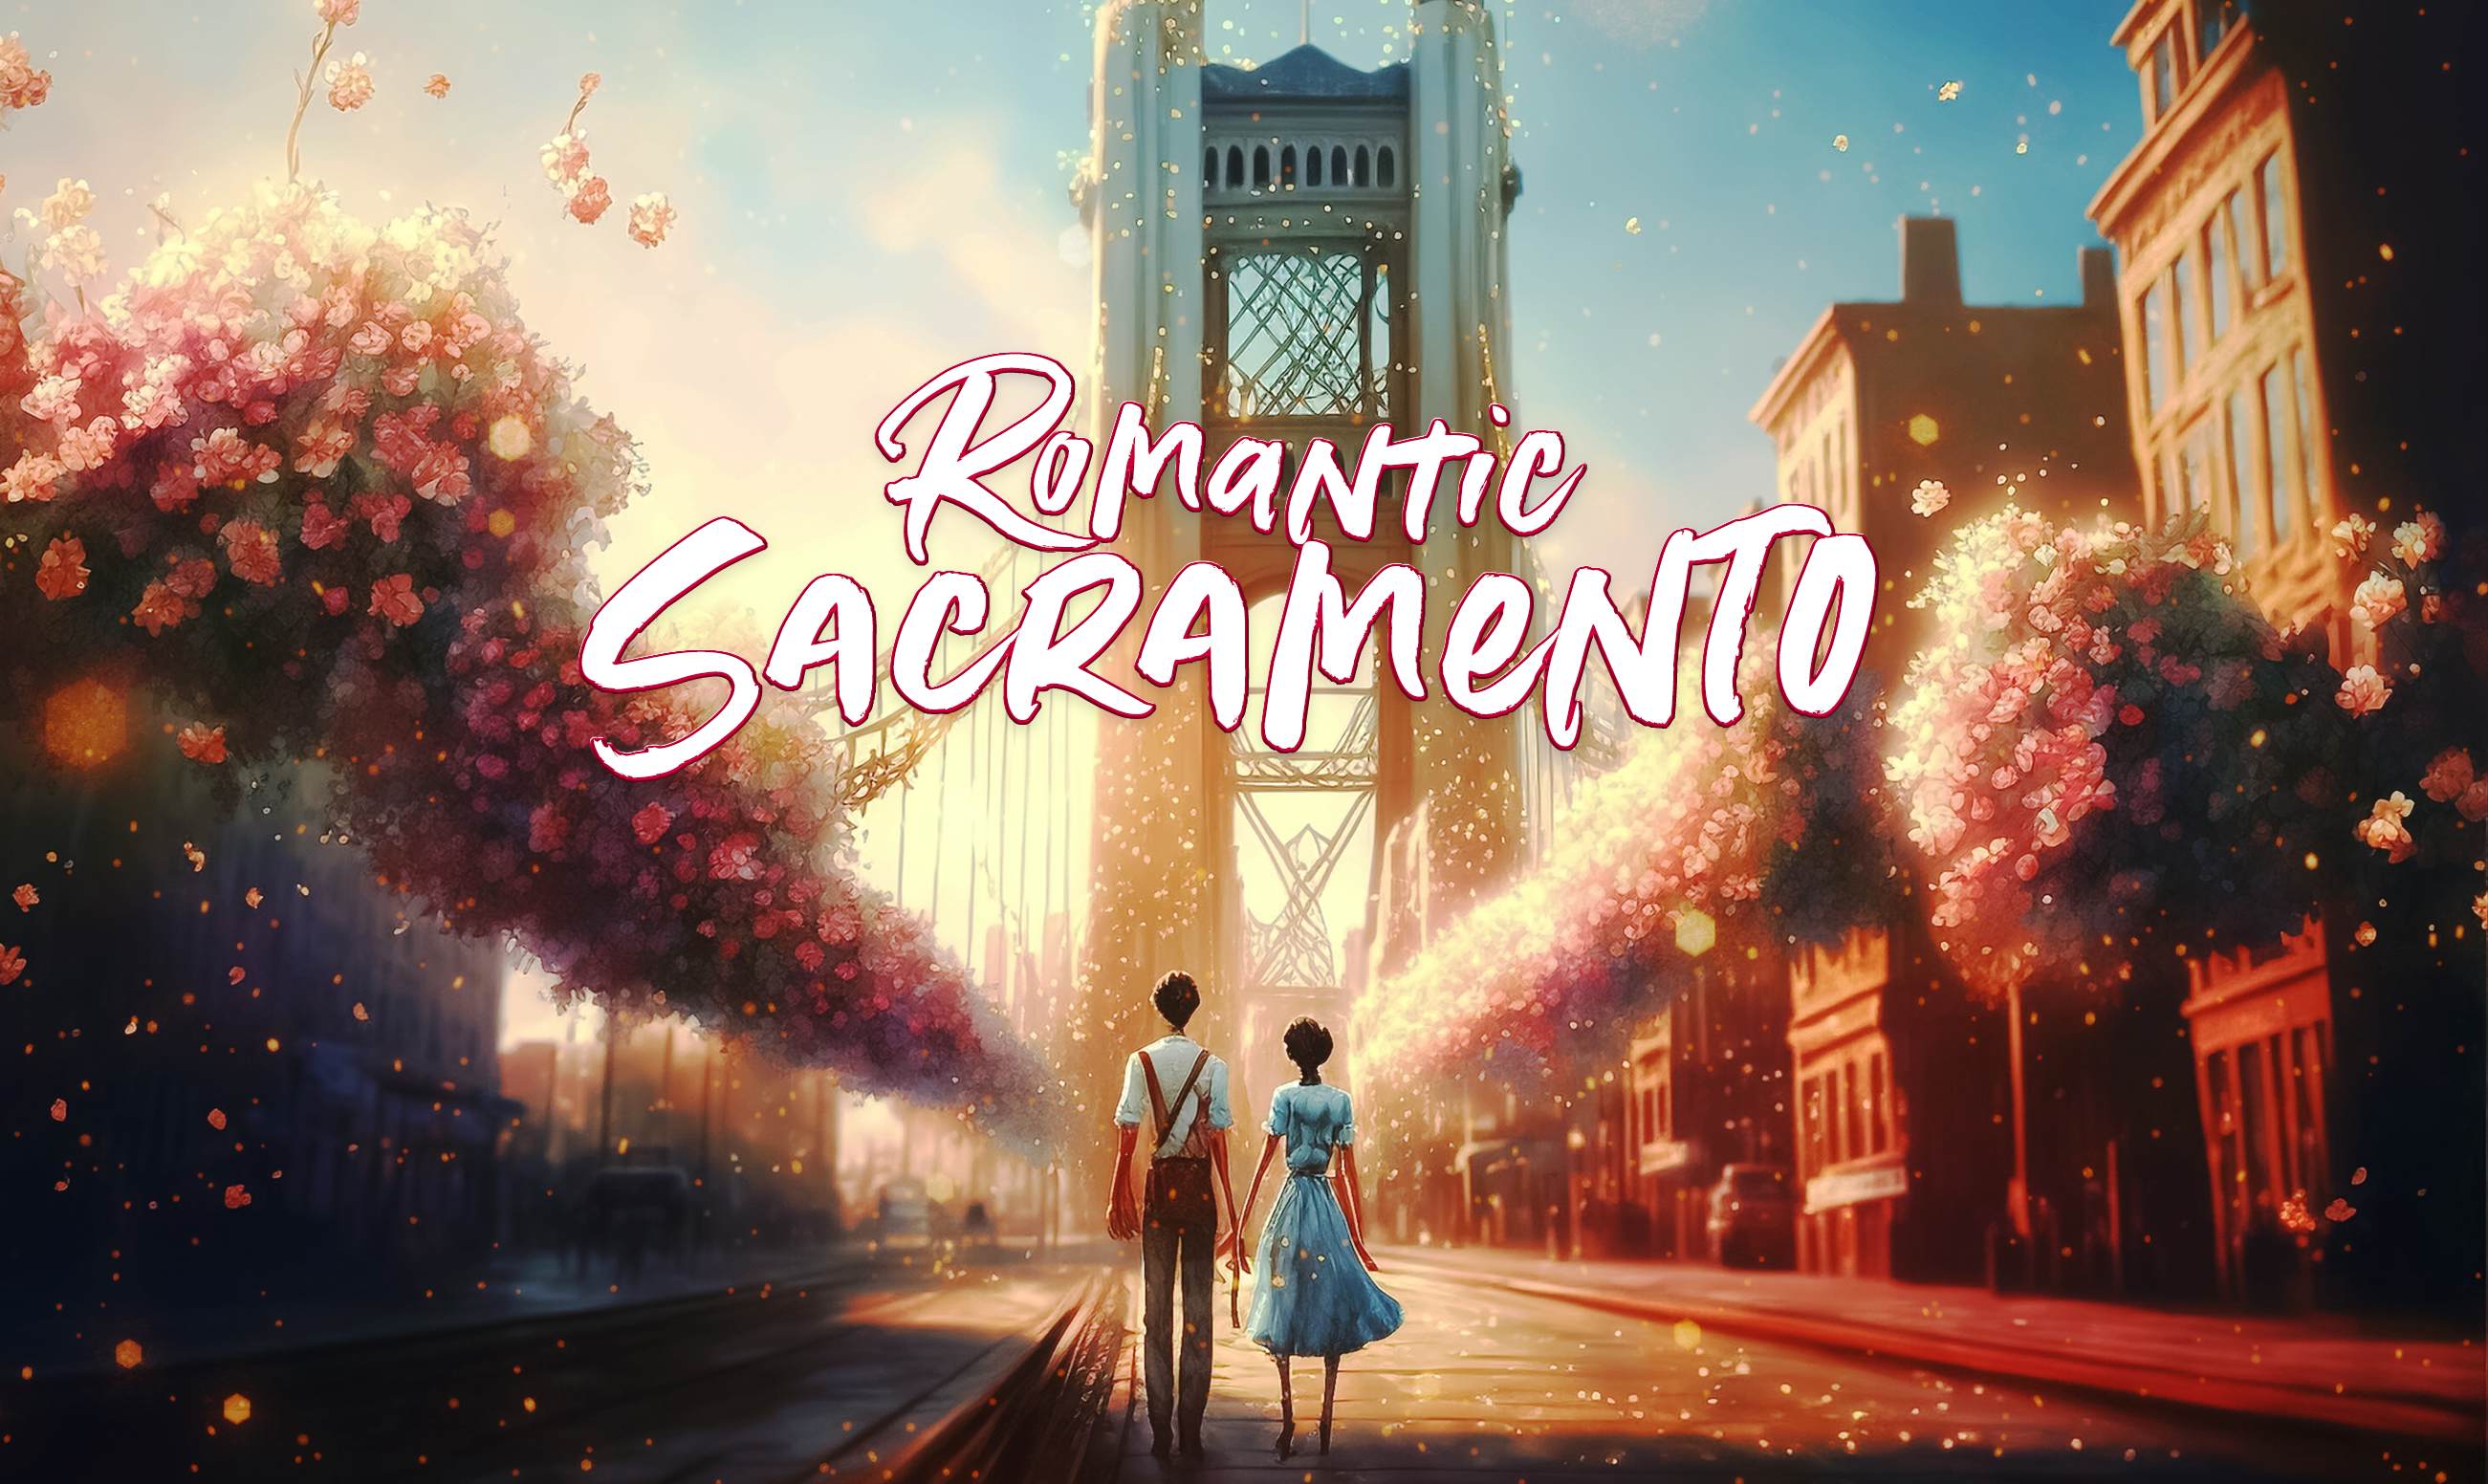 Romantic Sacramento image